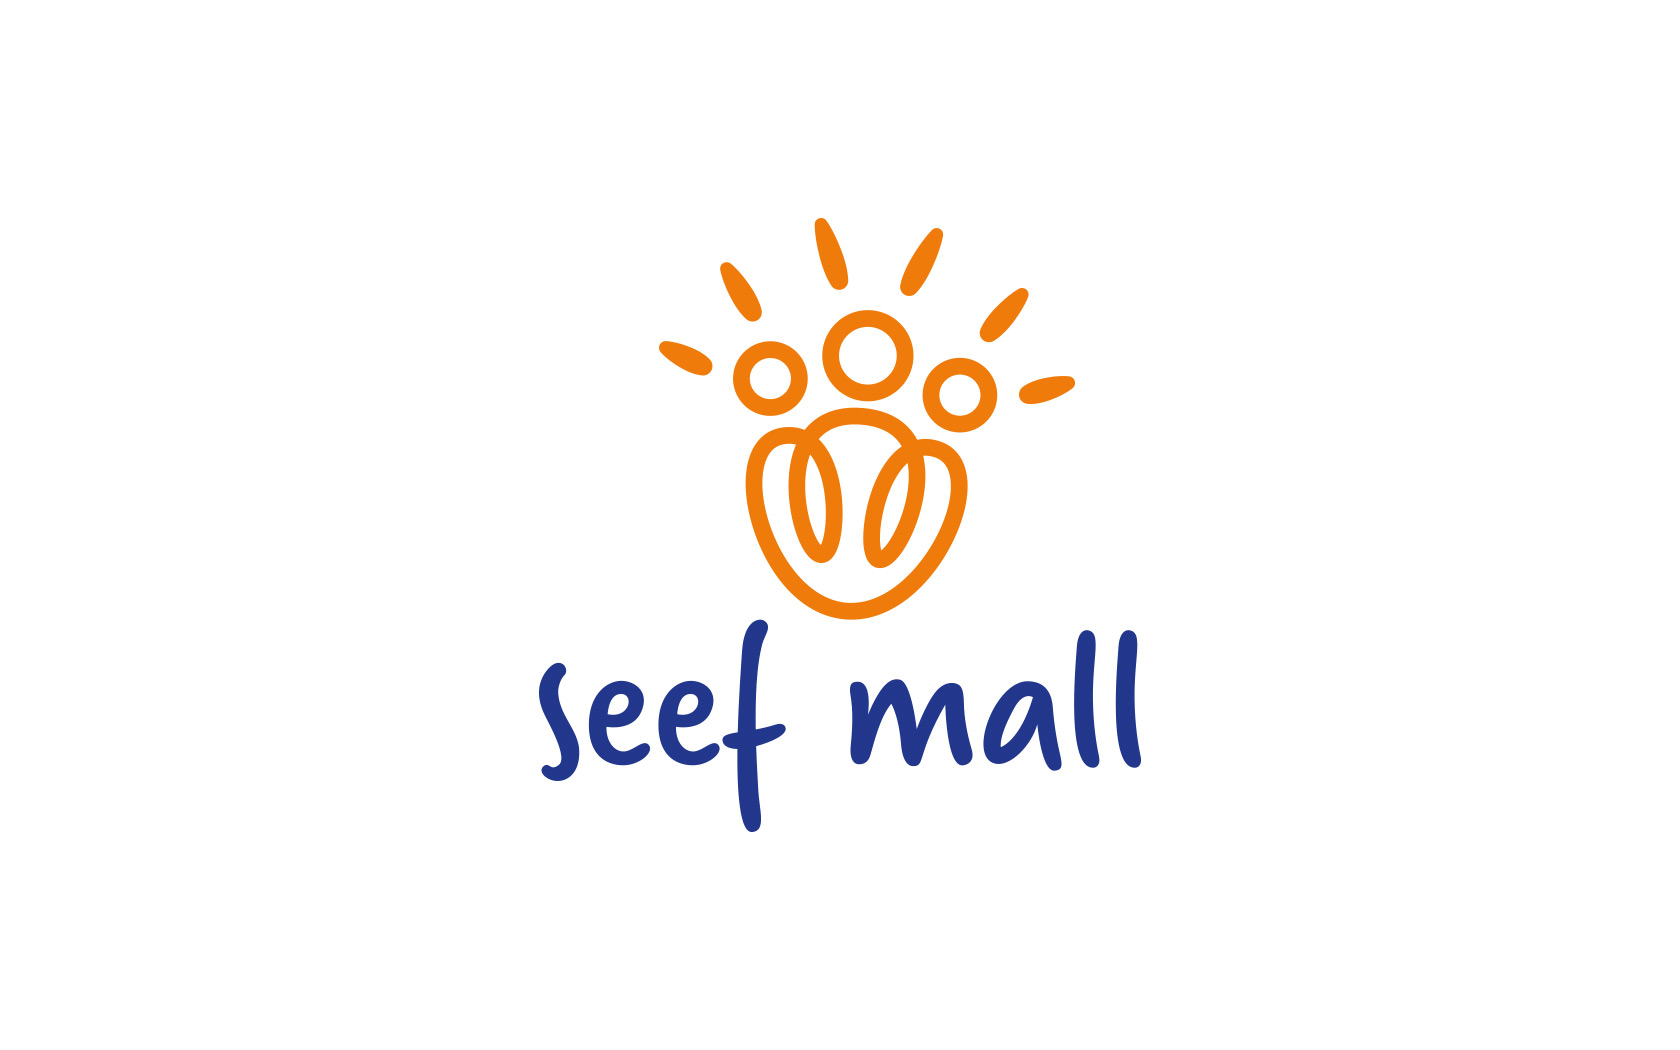 Seef Mall. Brand logo in English